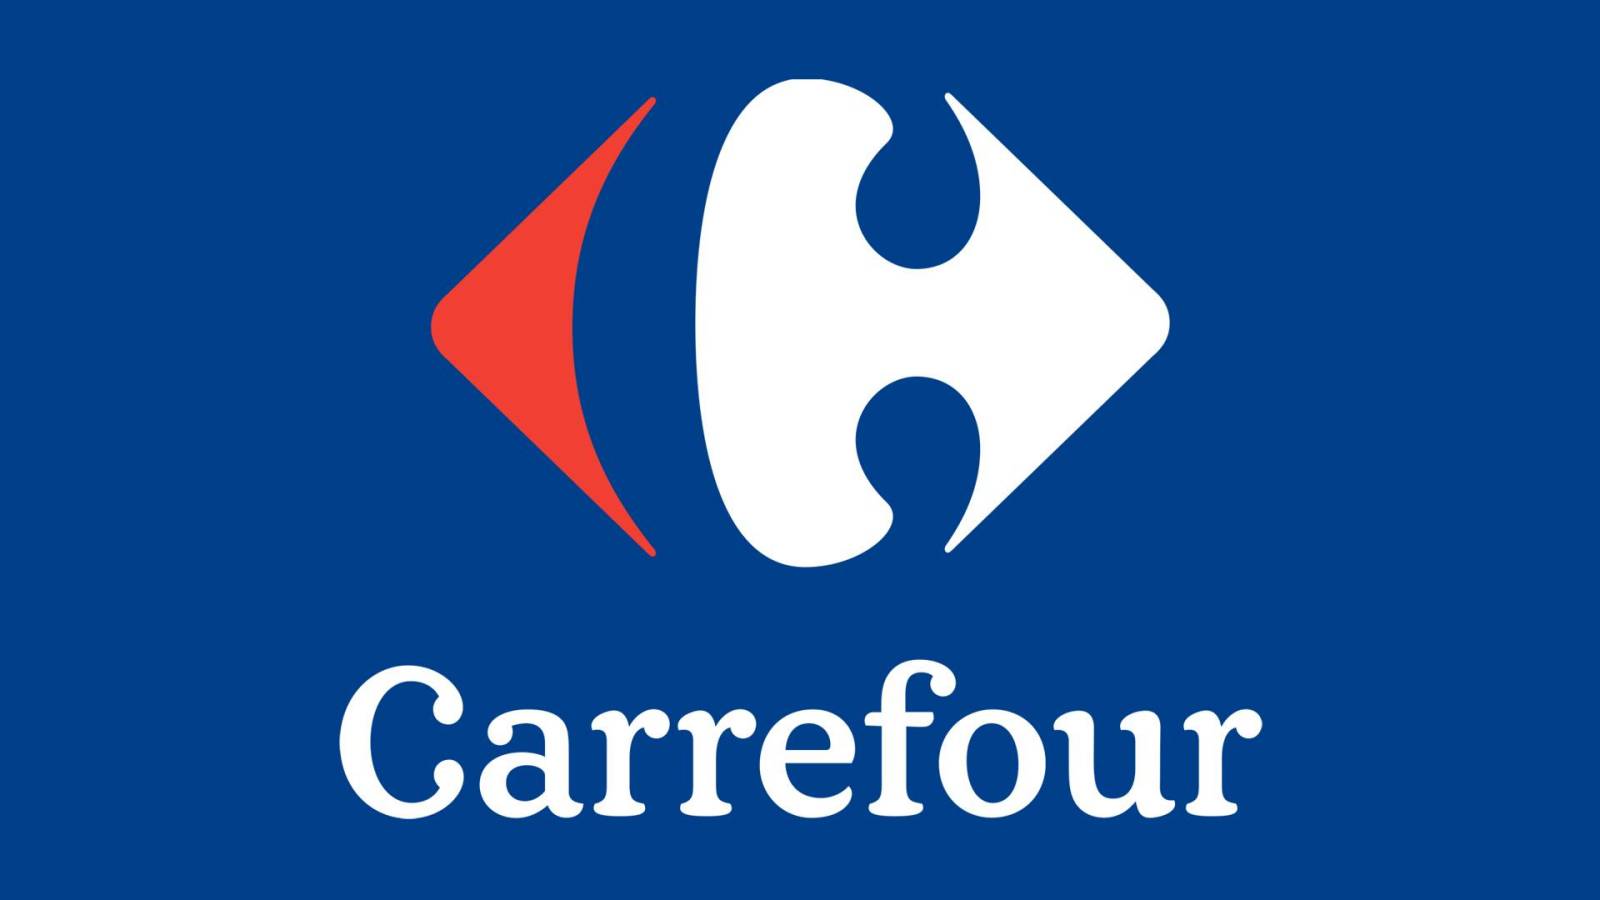 kupon Carrefoura